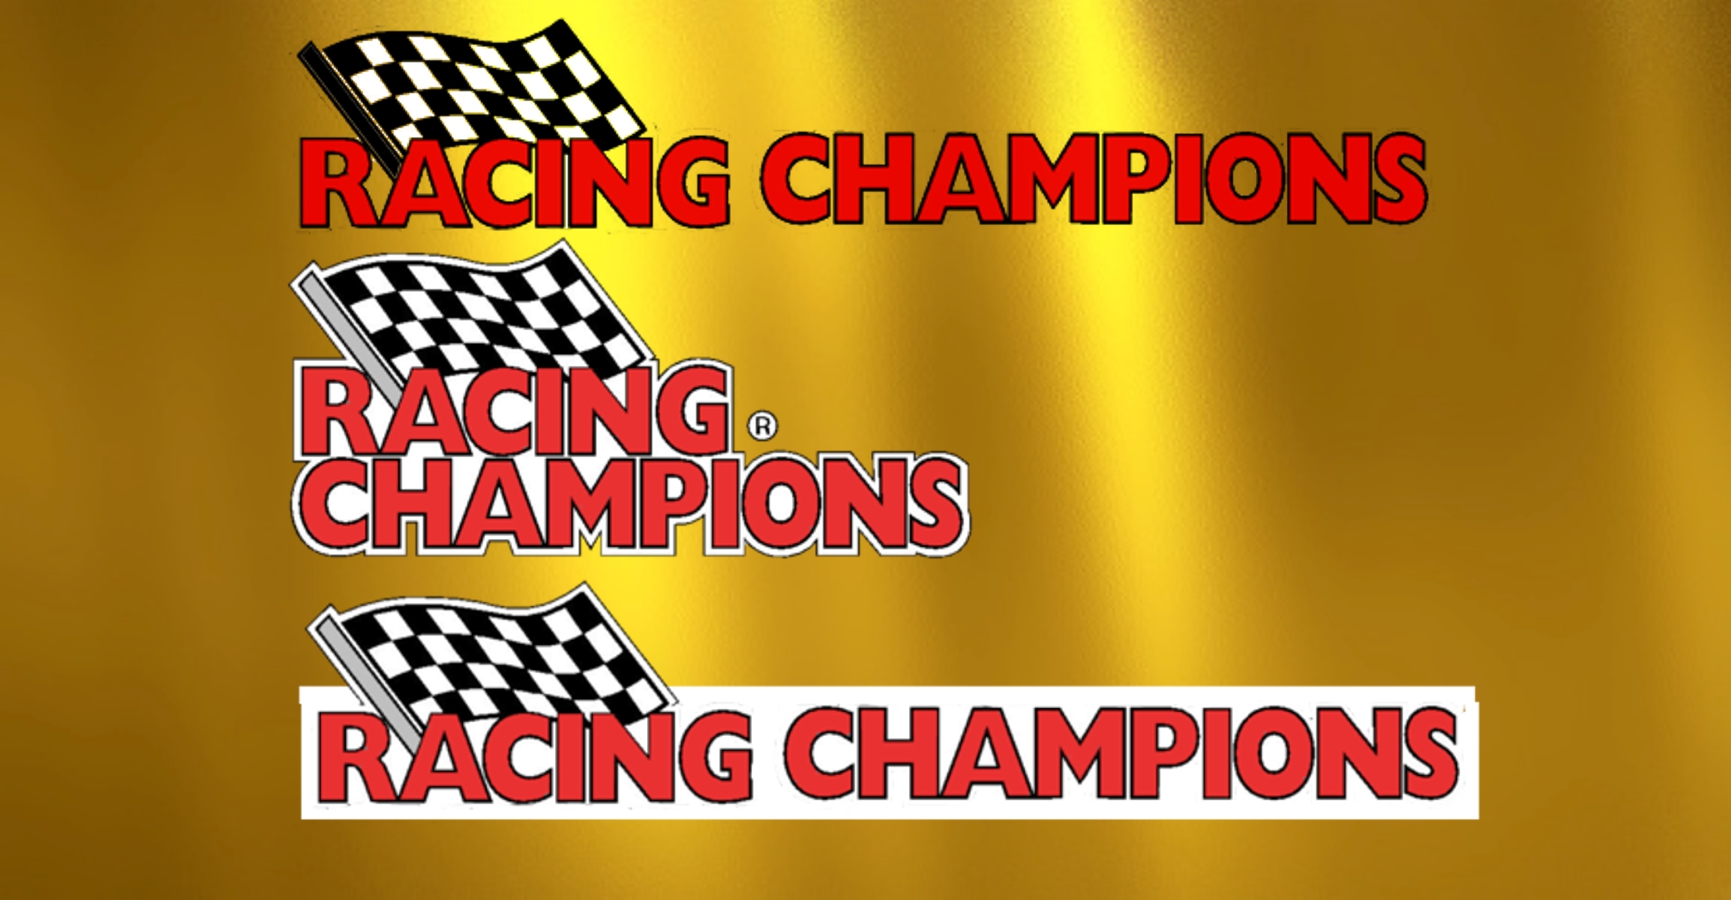 Racing Champions Logos.jpg